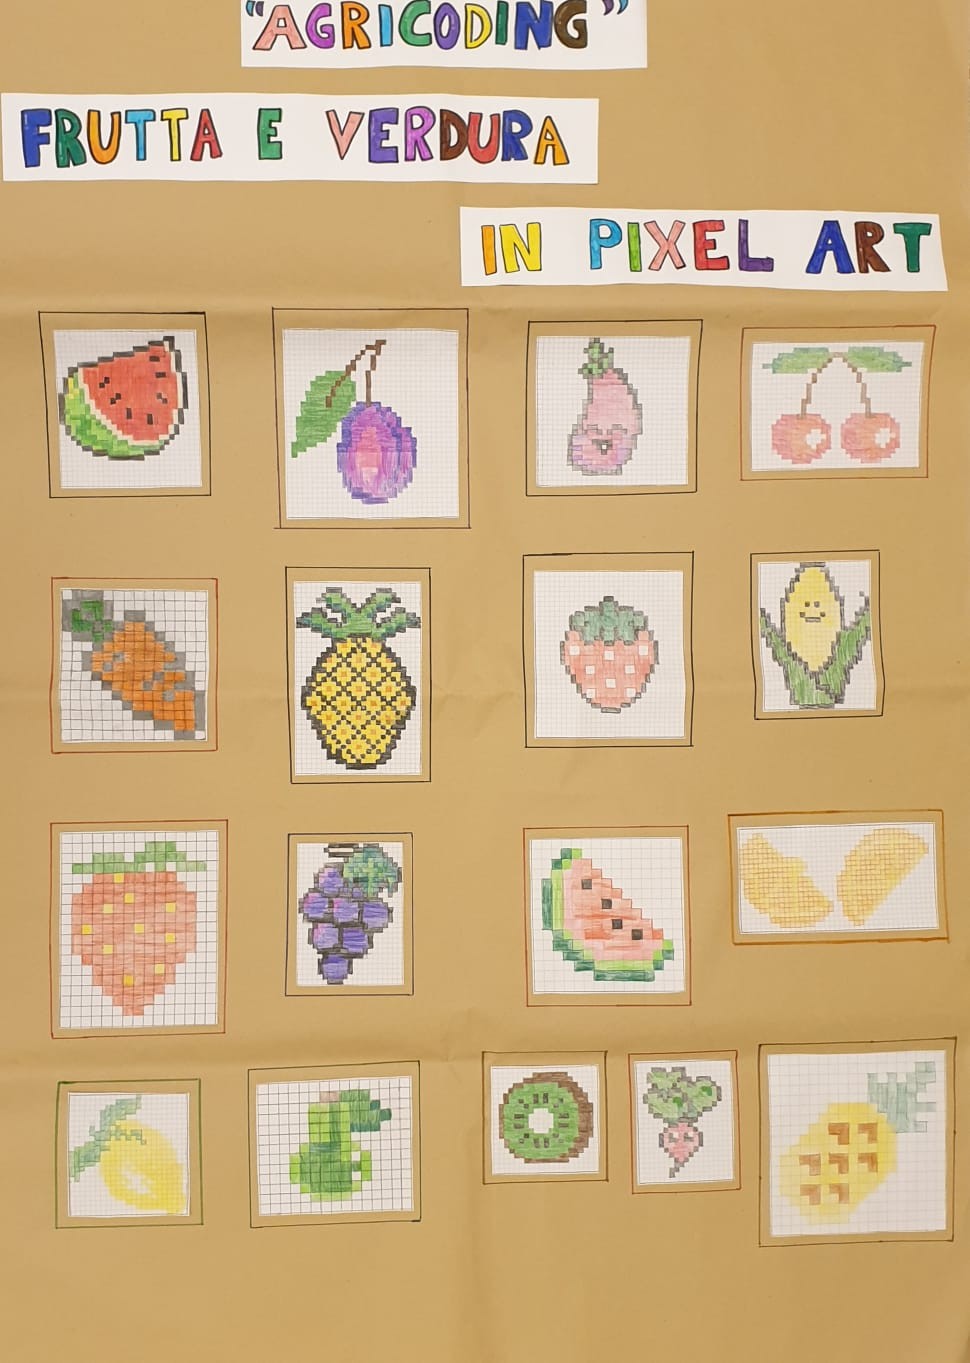 "Agricoding": frutta e verdura in pixel art.